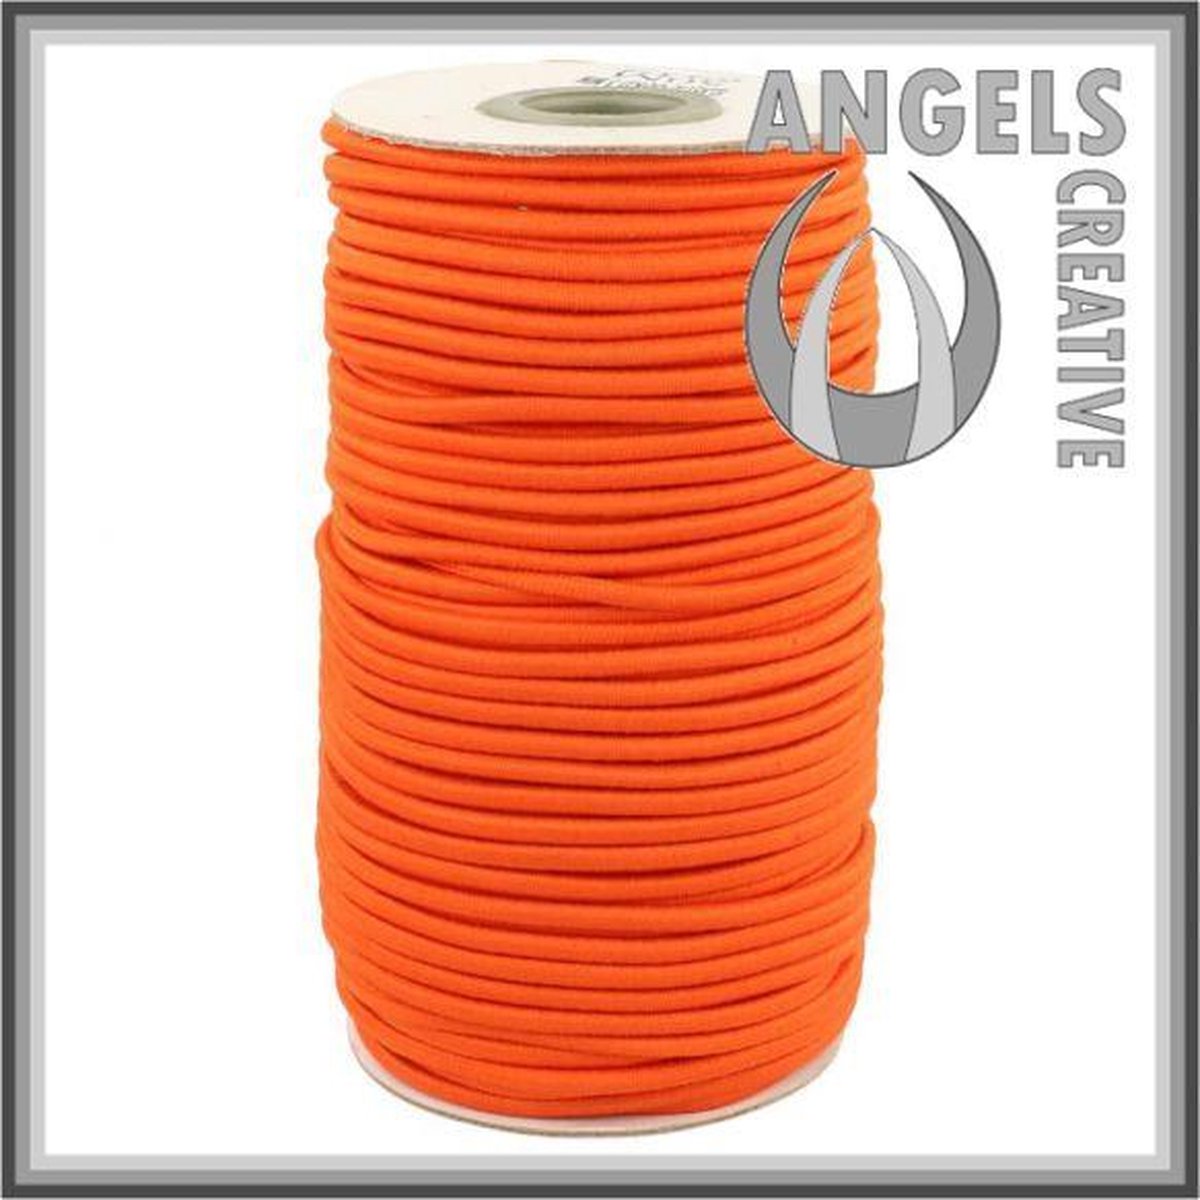 Koord elastiek 3 mm oranje, 100 cm | bol.com